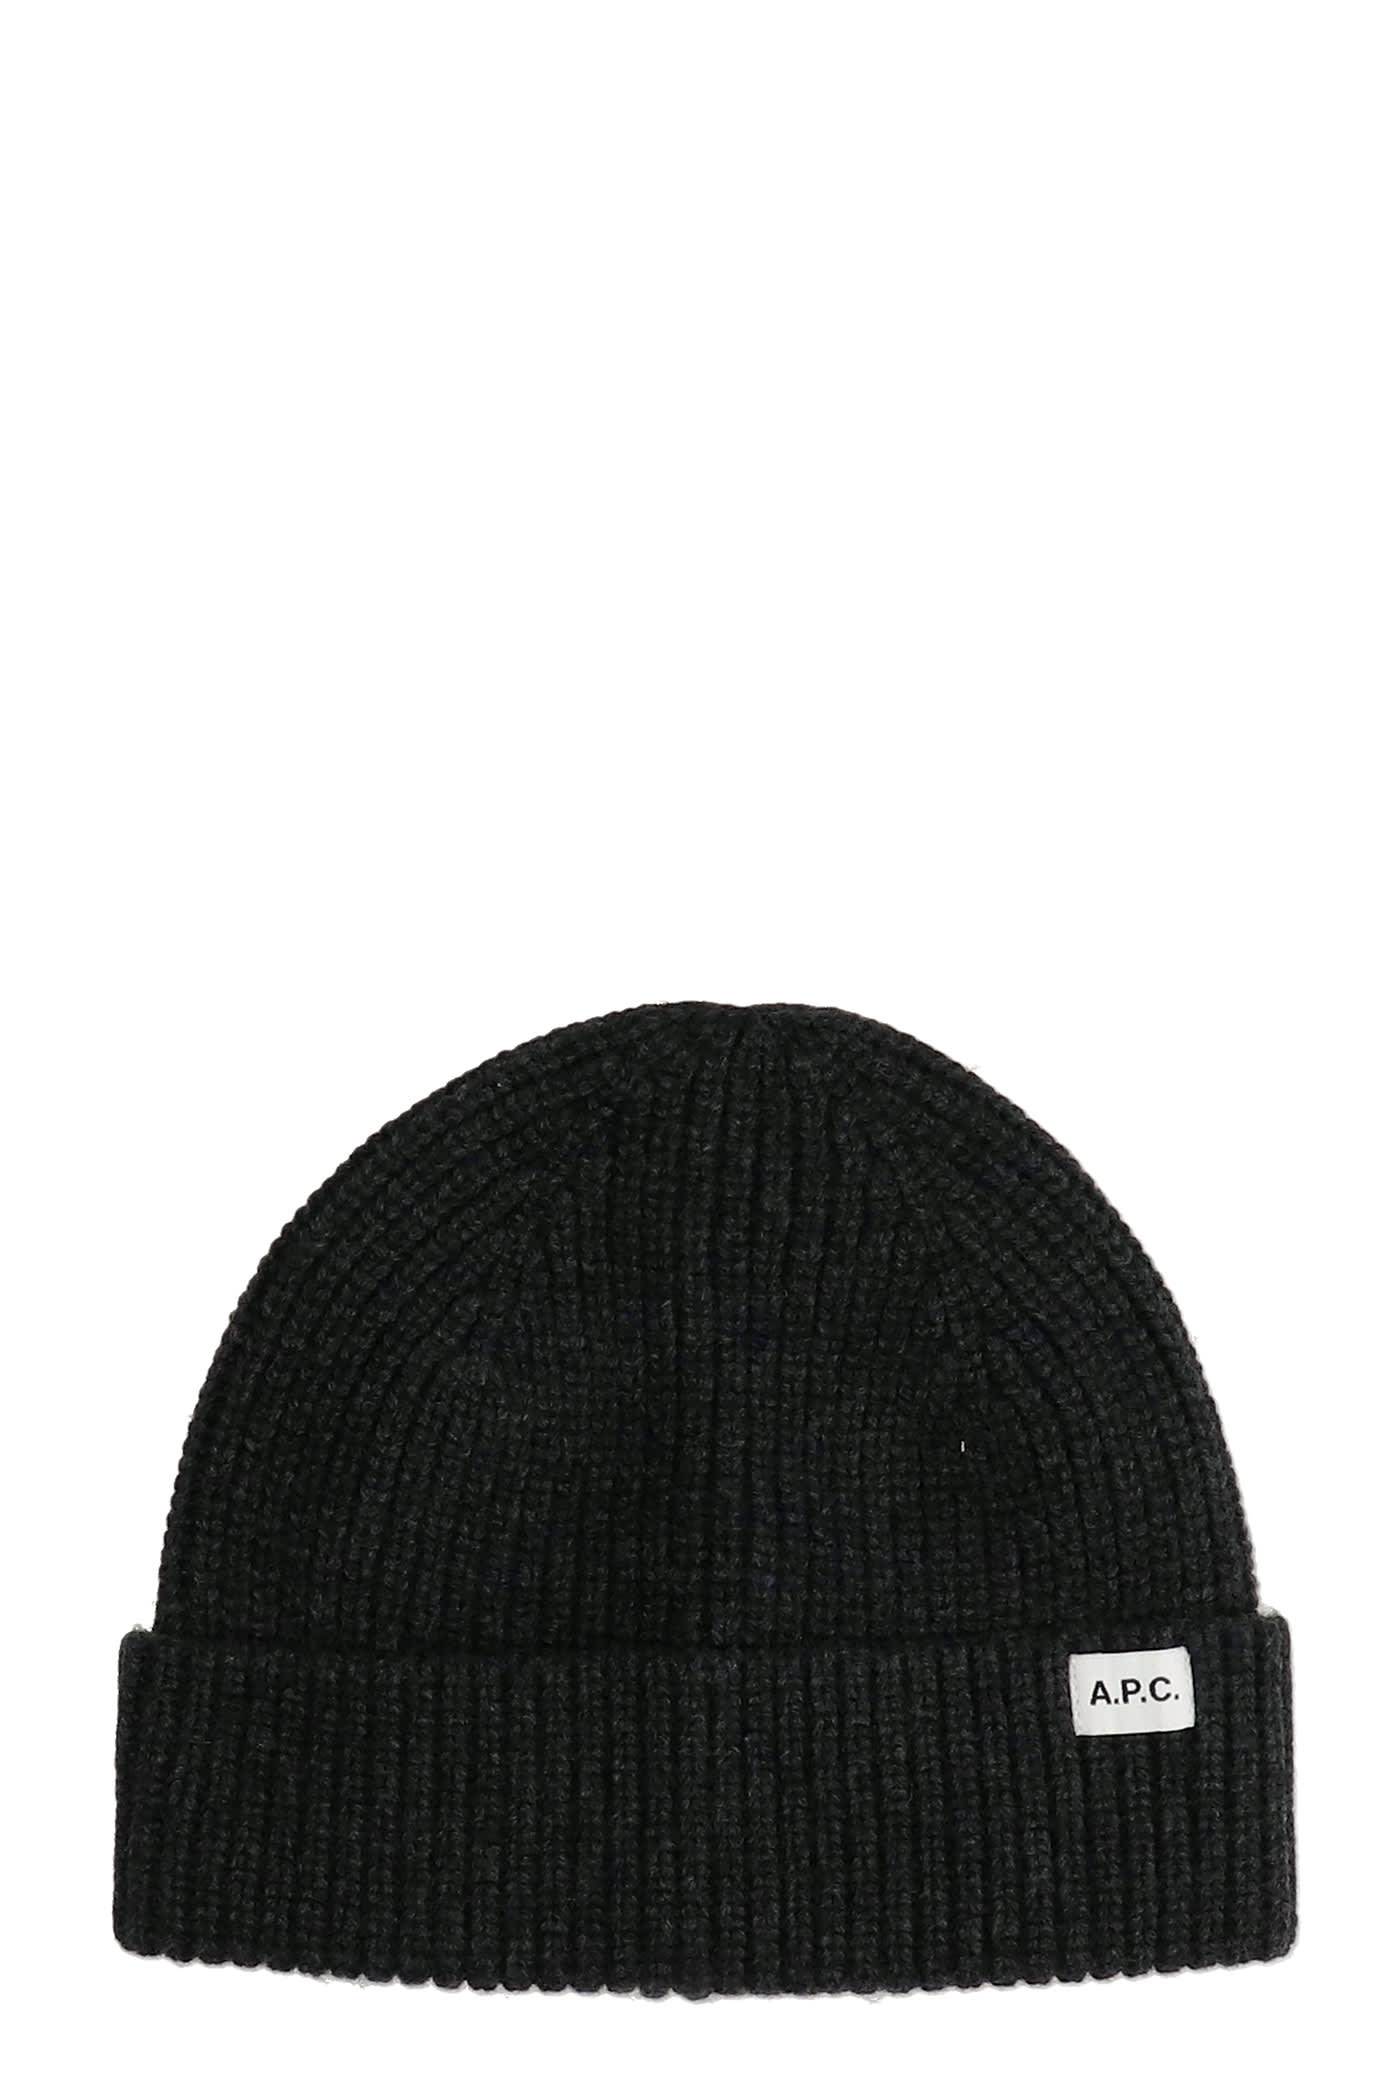 A.P.C. New Billie Hats In Black Wool